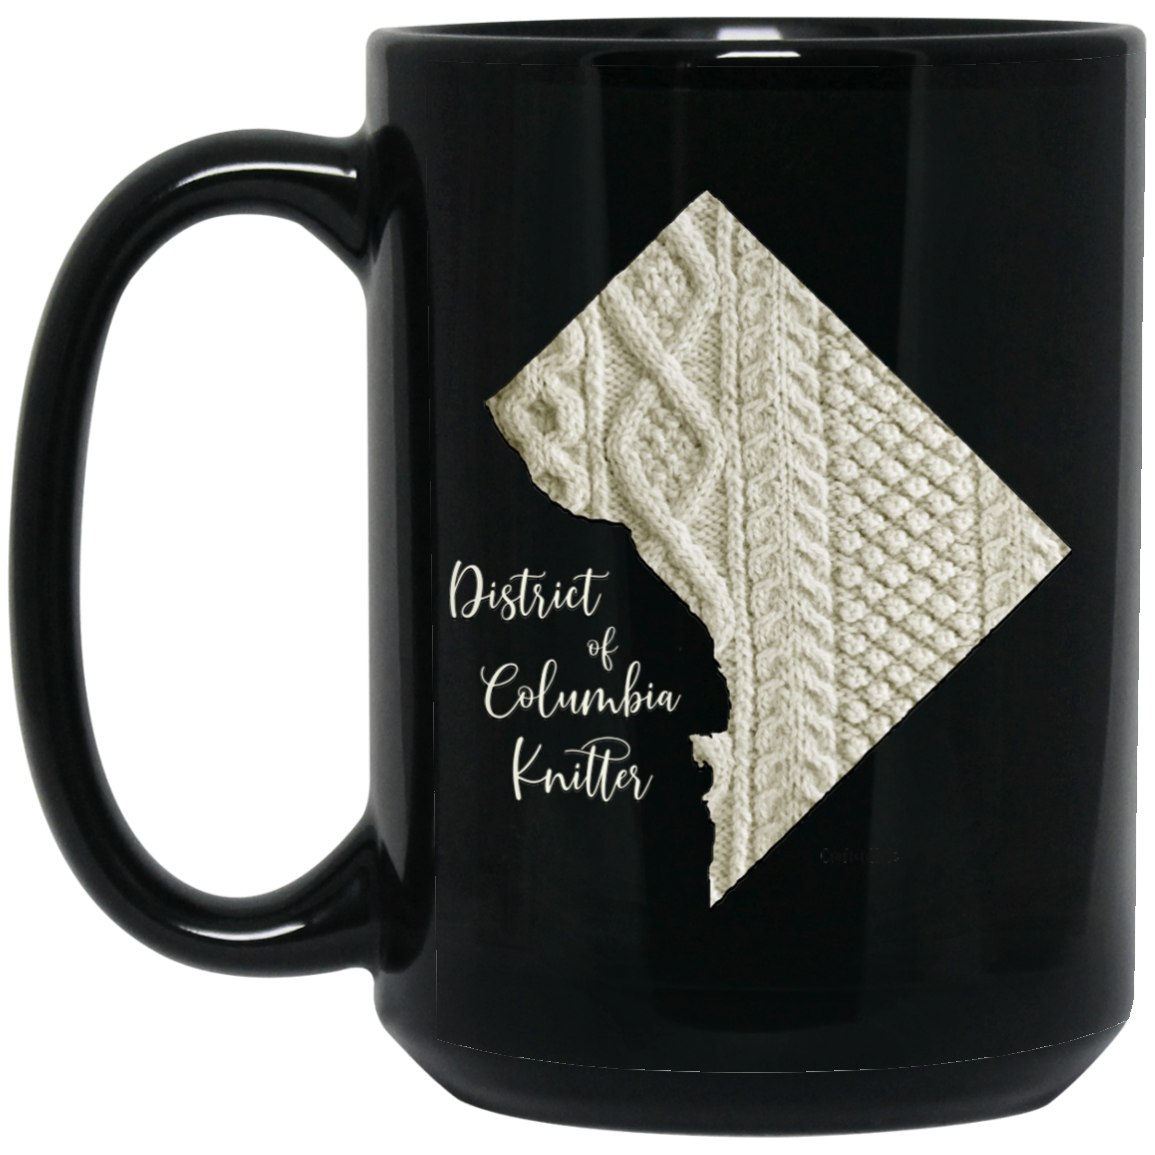 District of Columbia Knitter Mugs